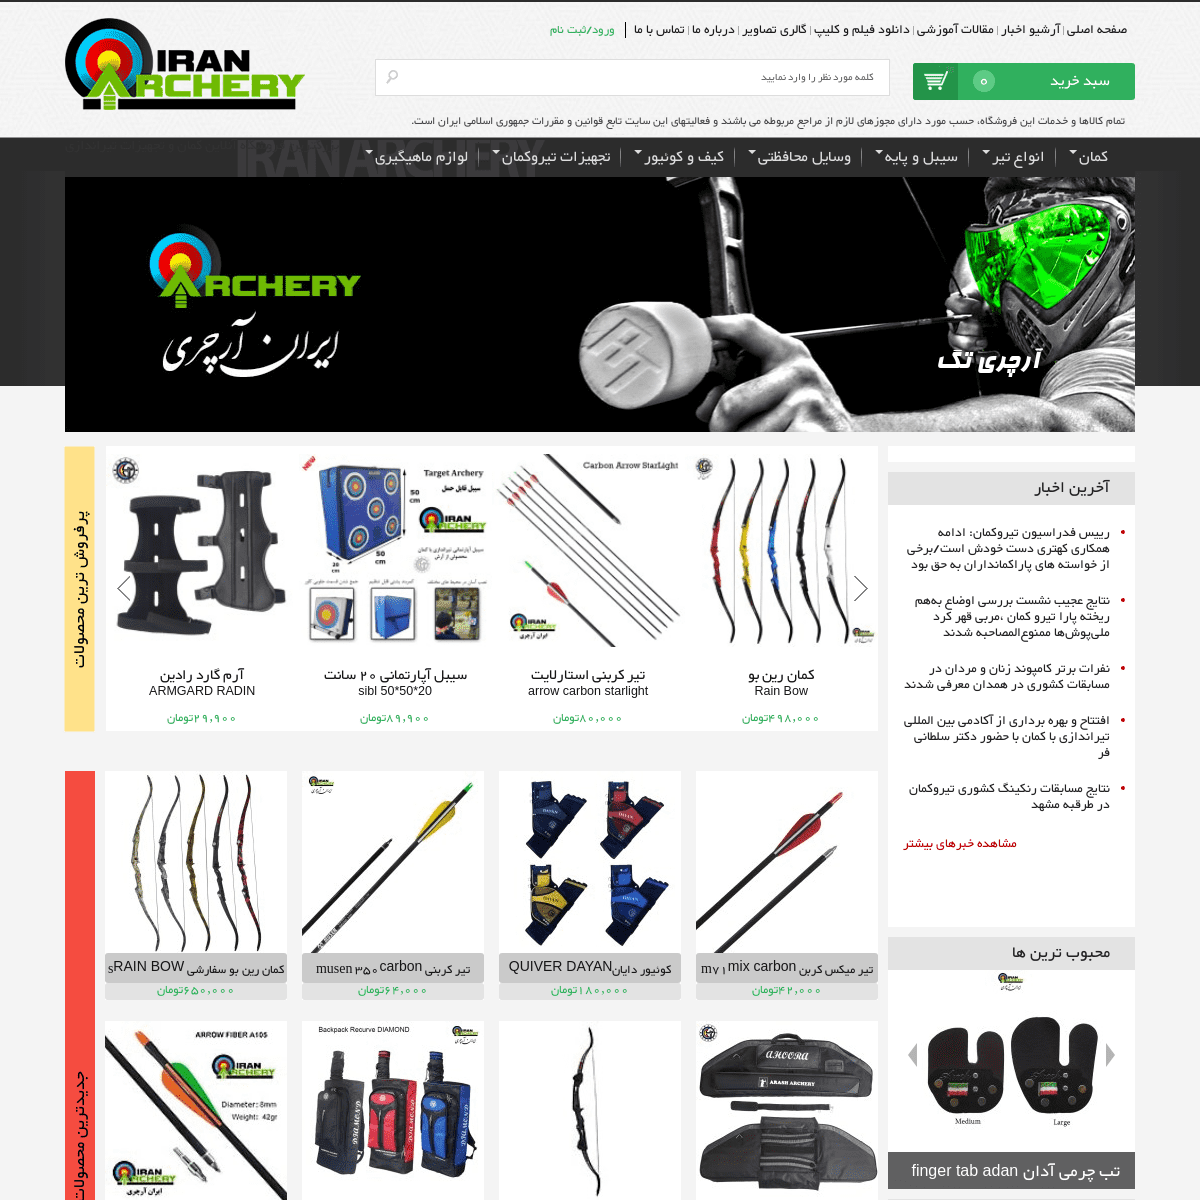 A complete backup of iran-archery.com